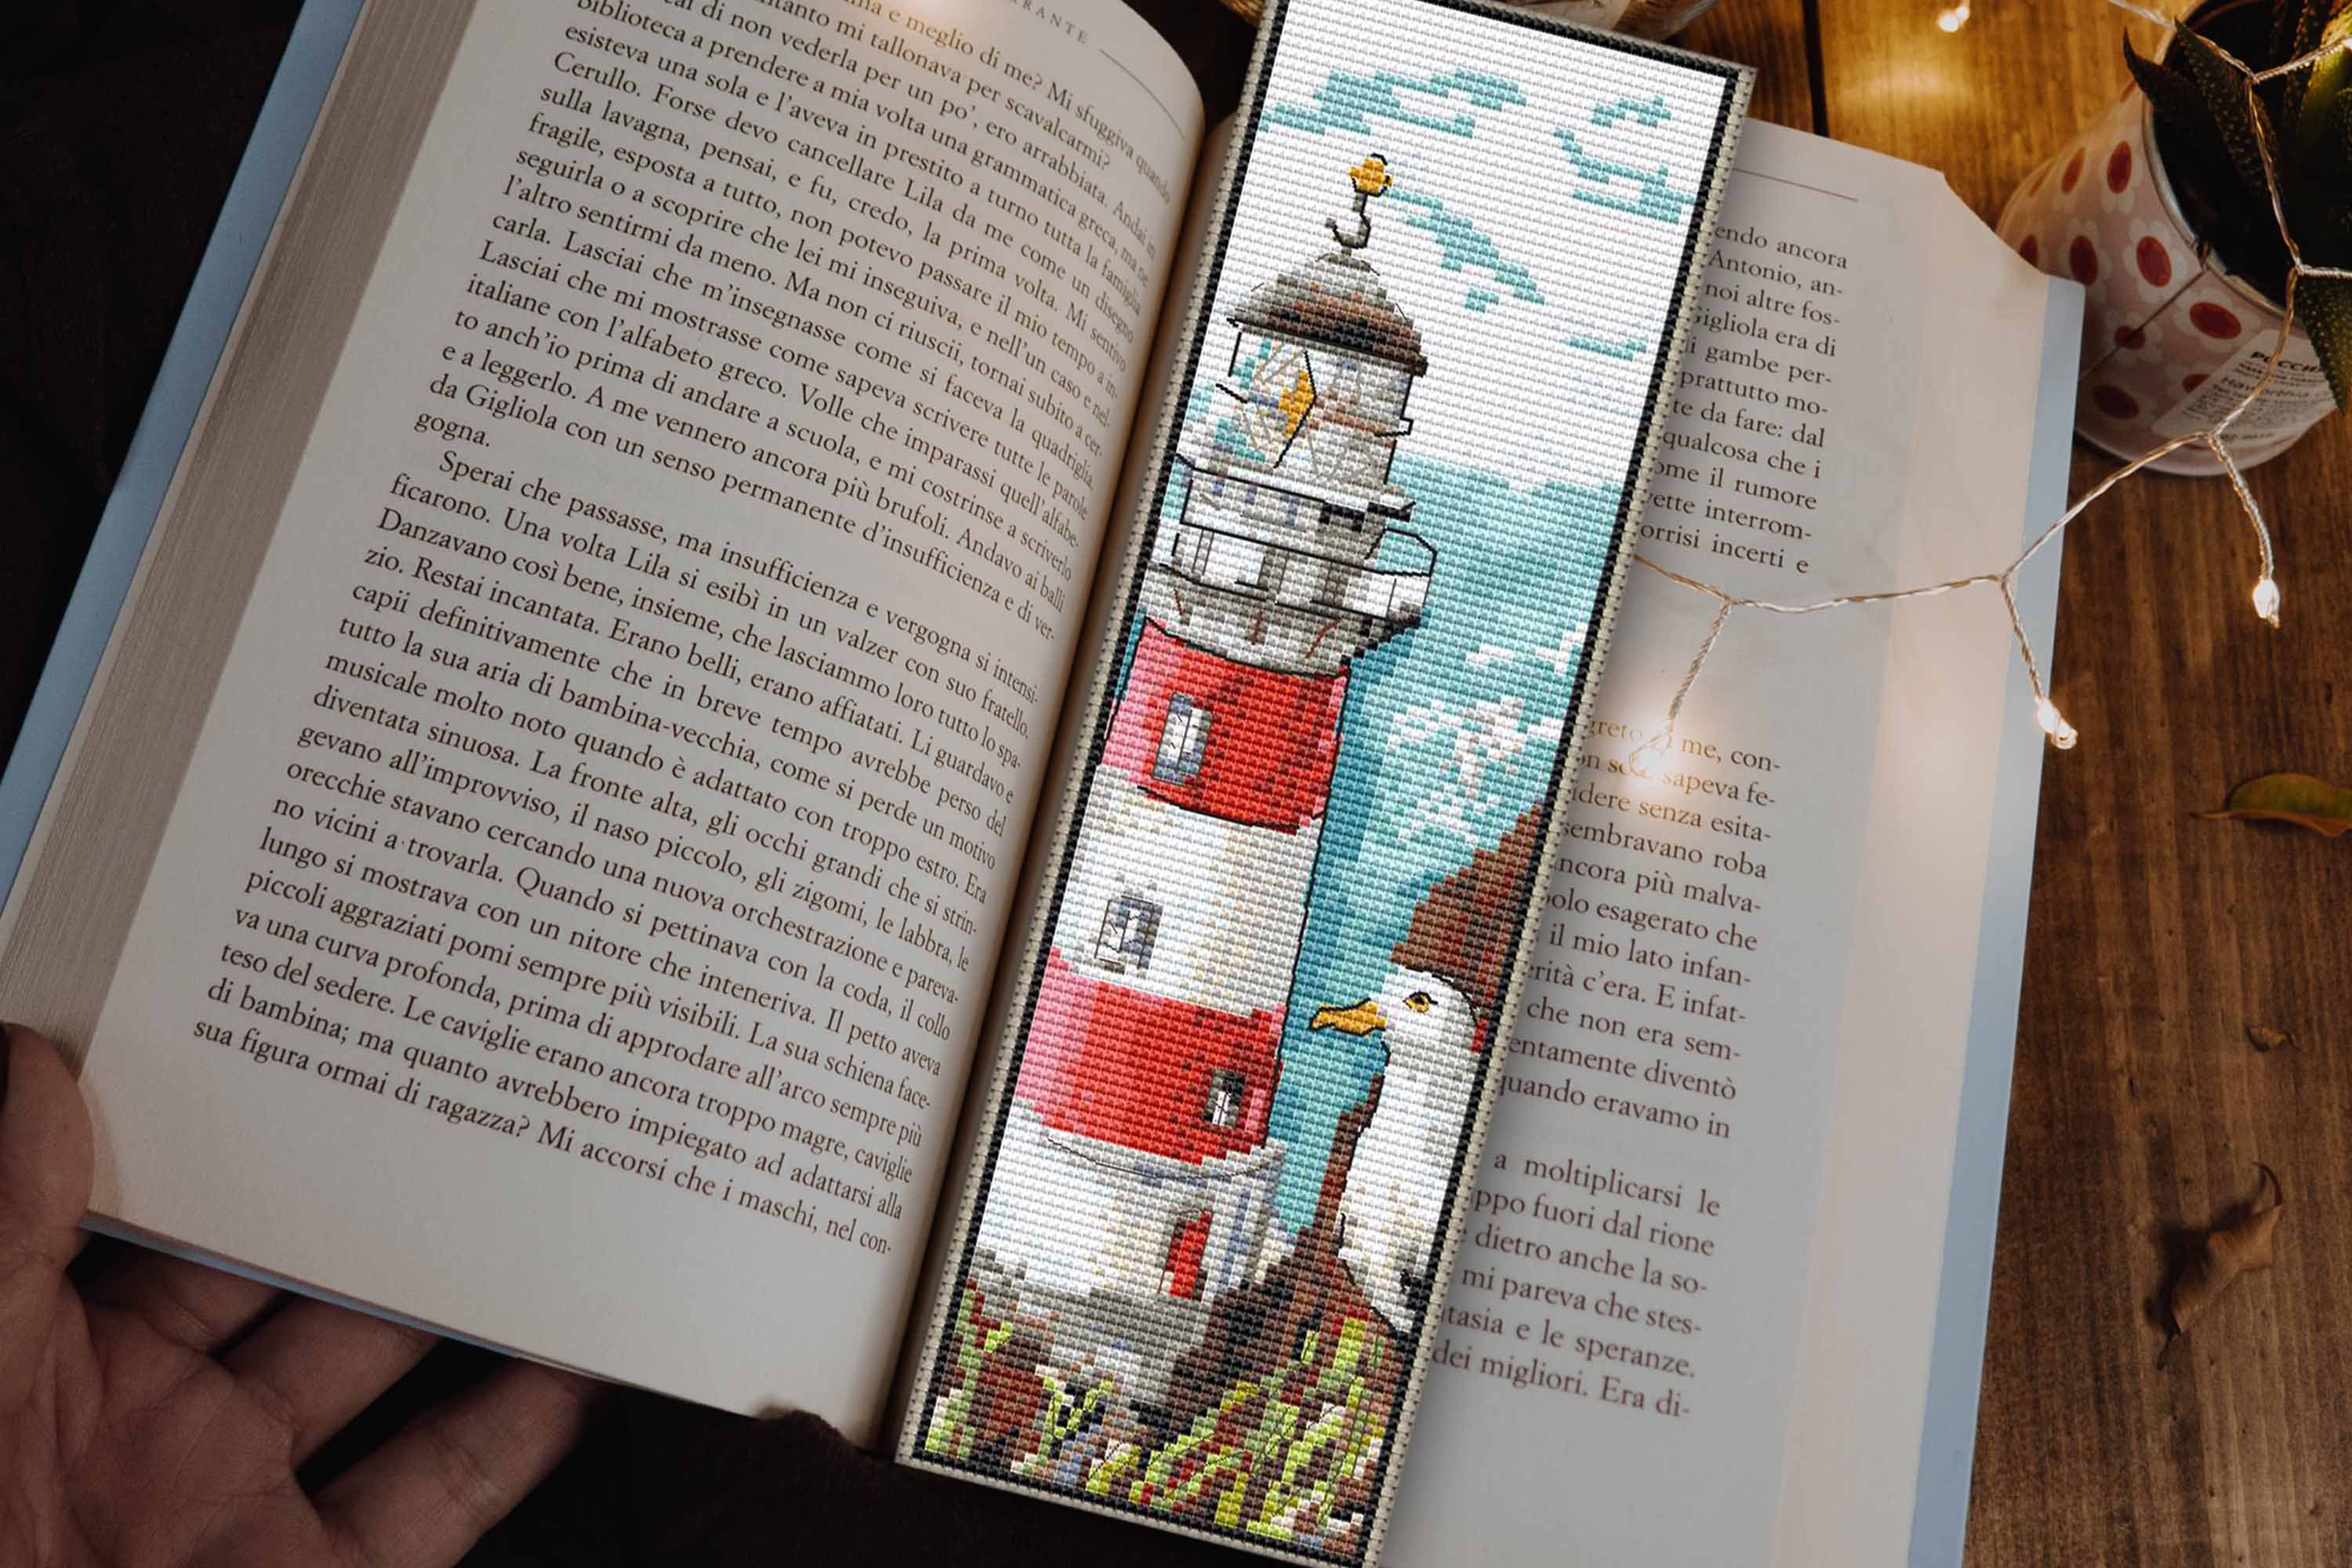 Cross stitch bookmark kit Lighthouse